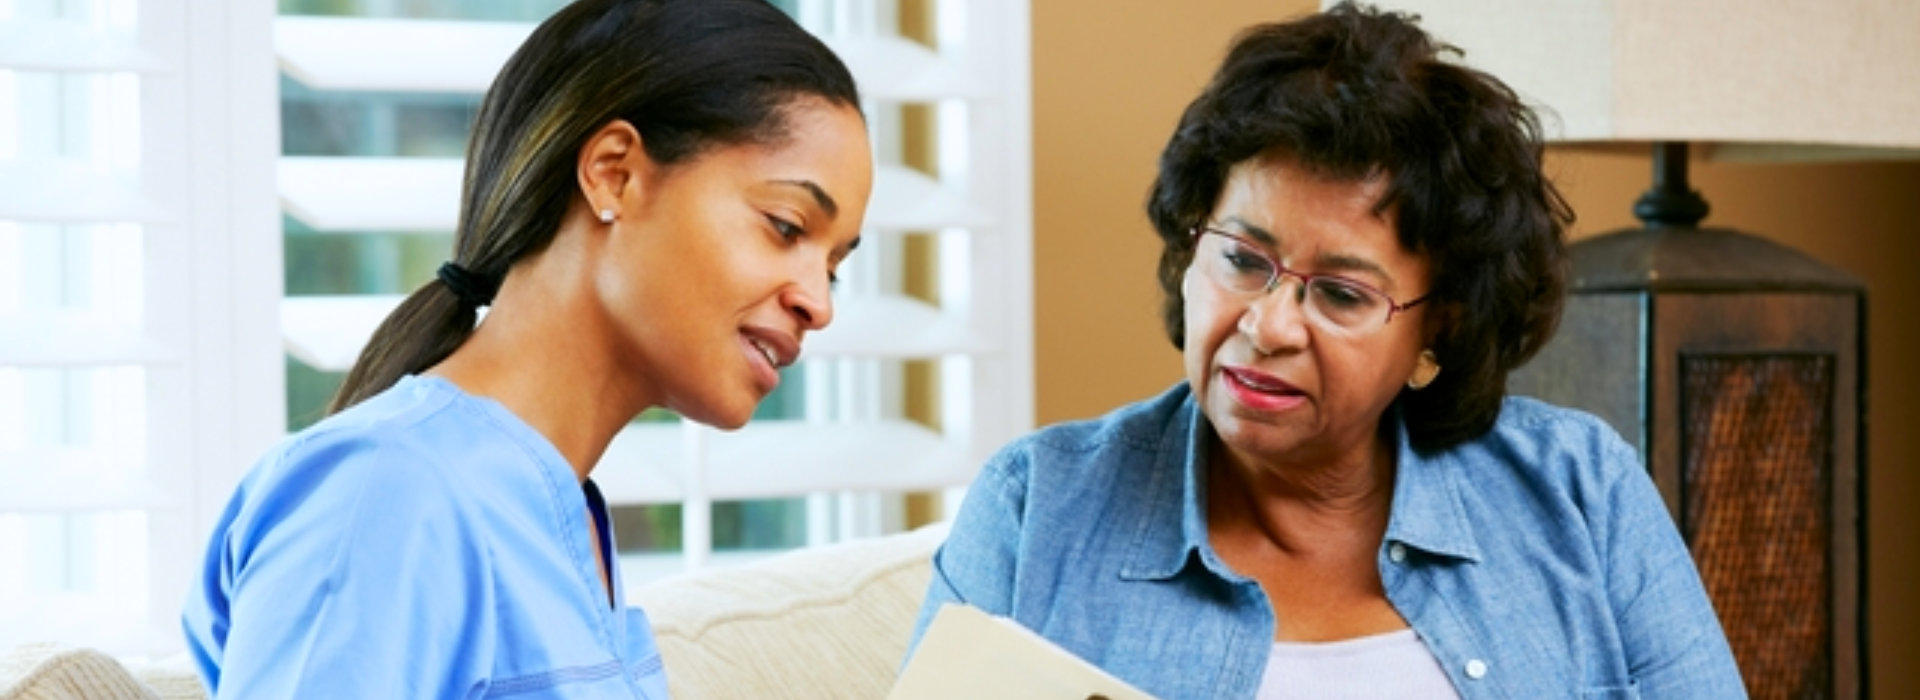 caregiver talking to senior woman